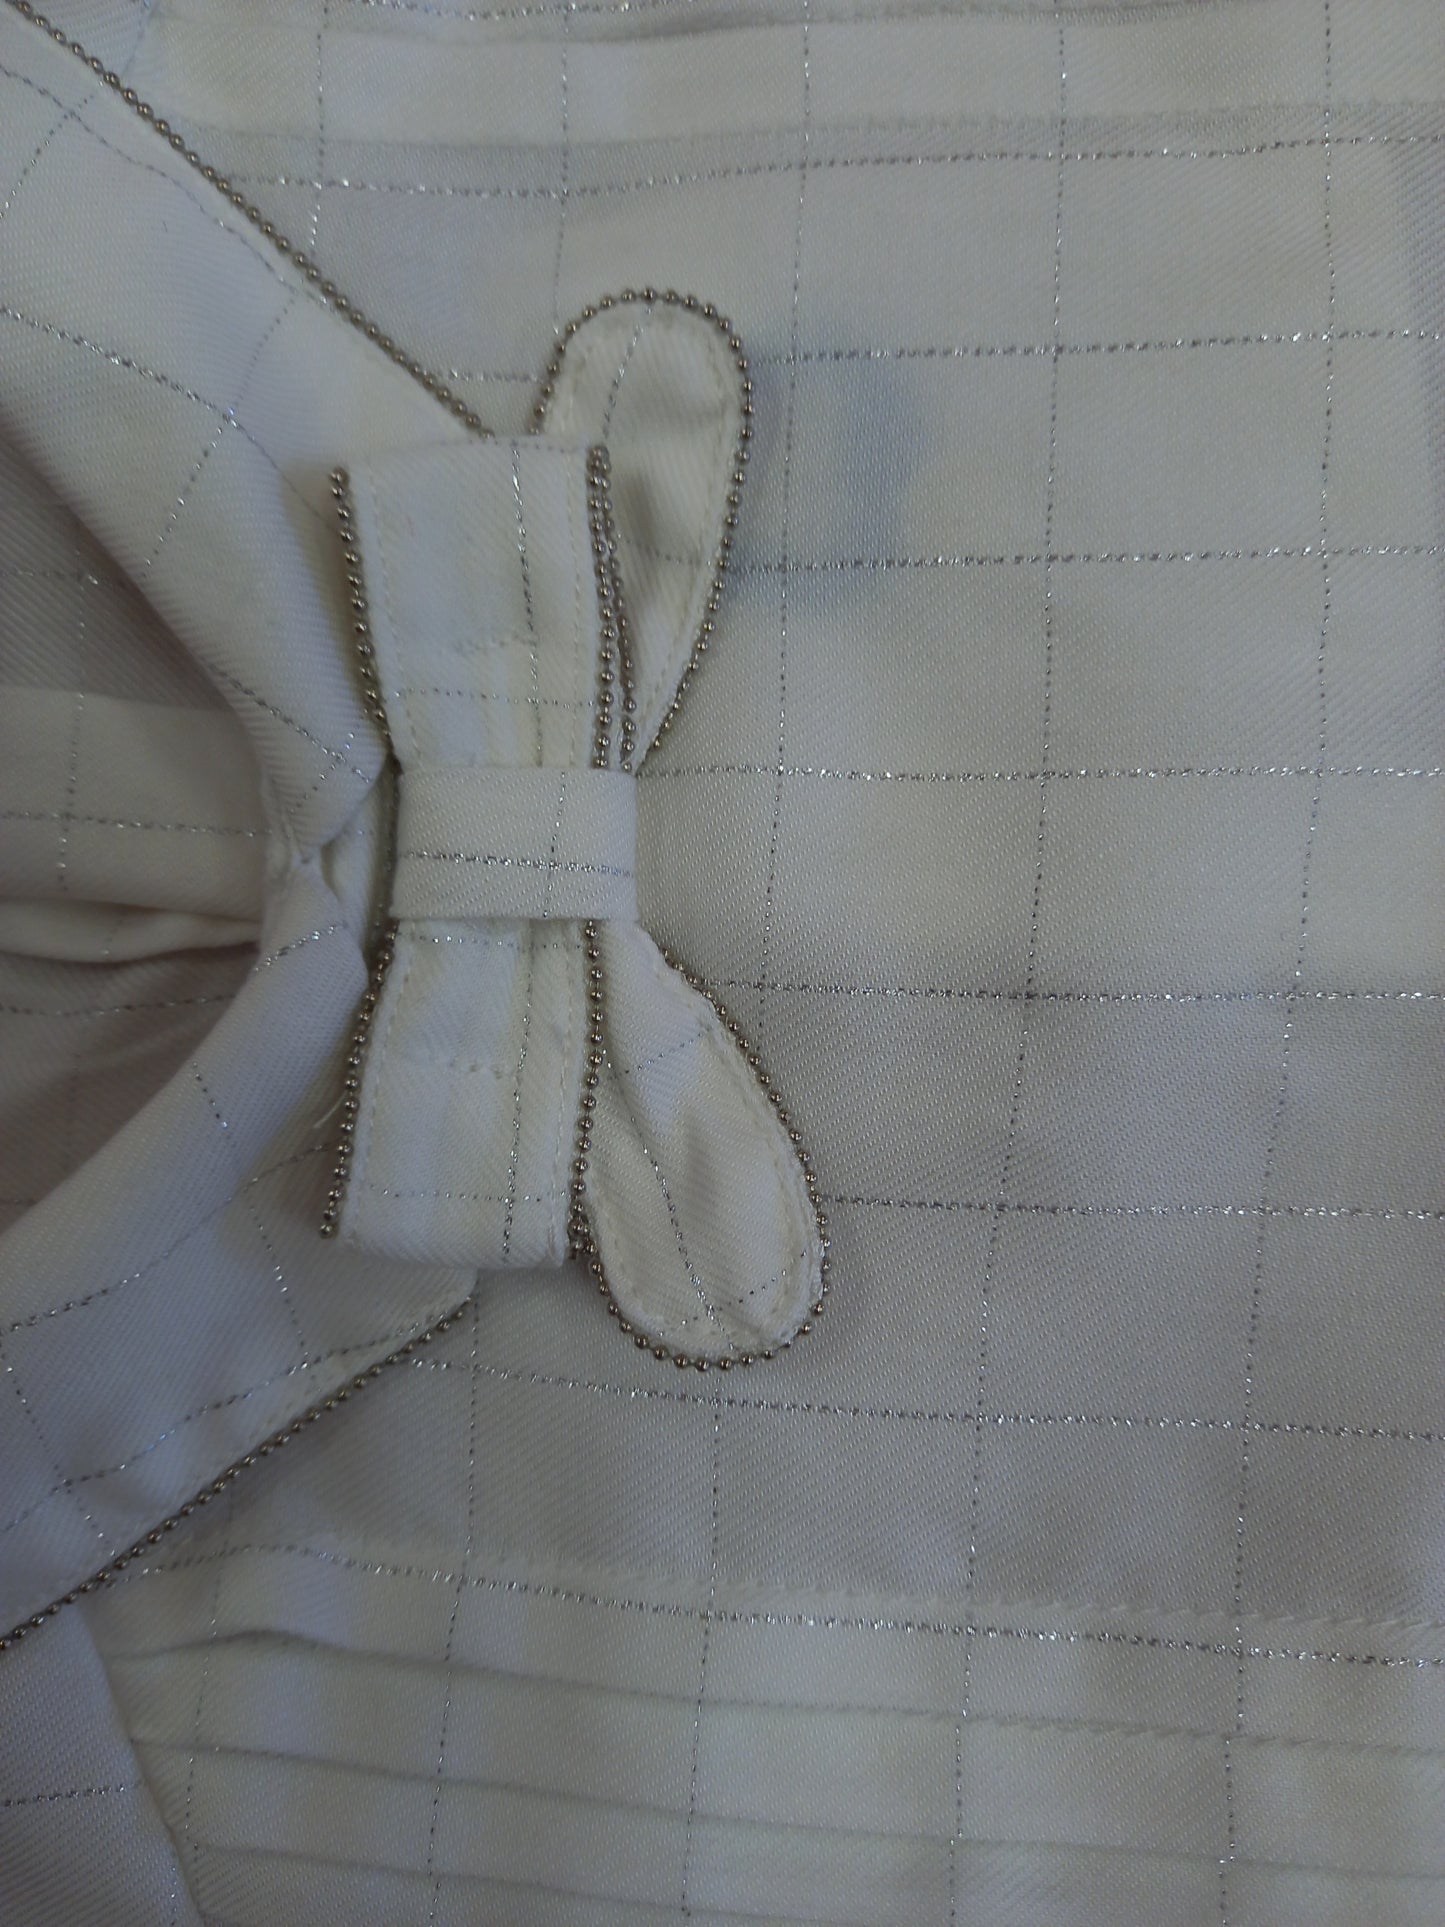 Gray set purse pants with white blouse